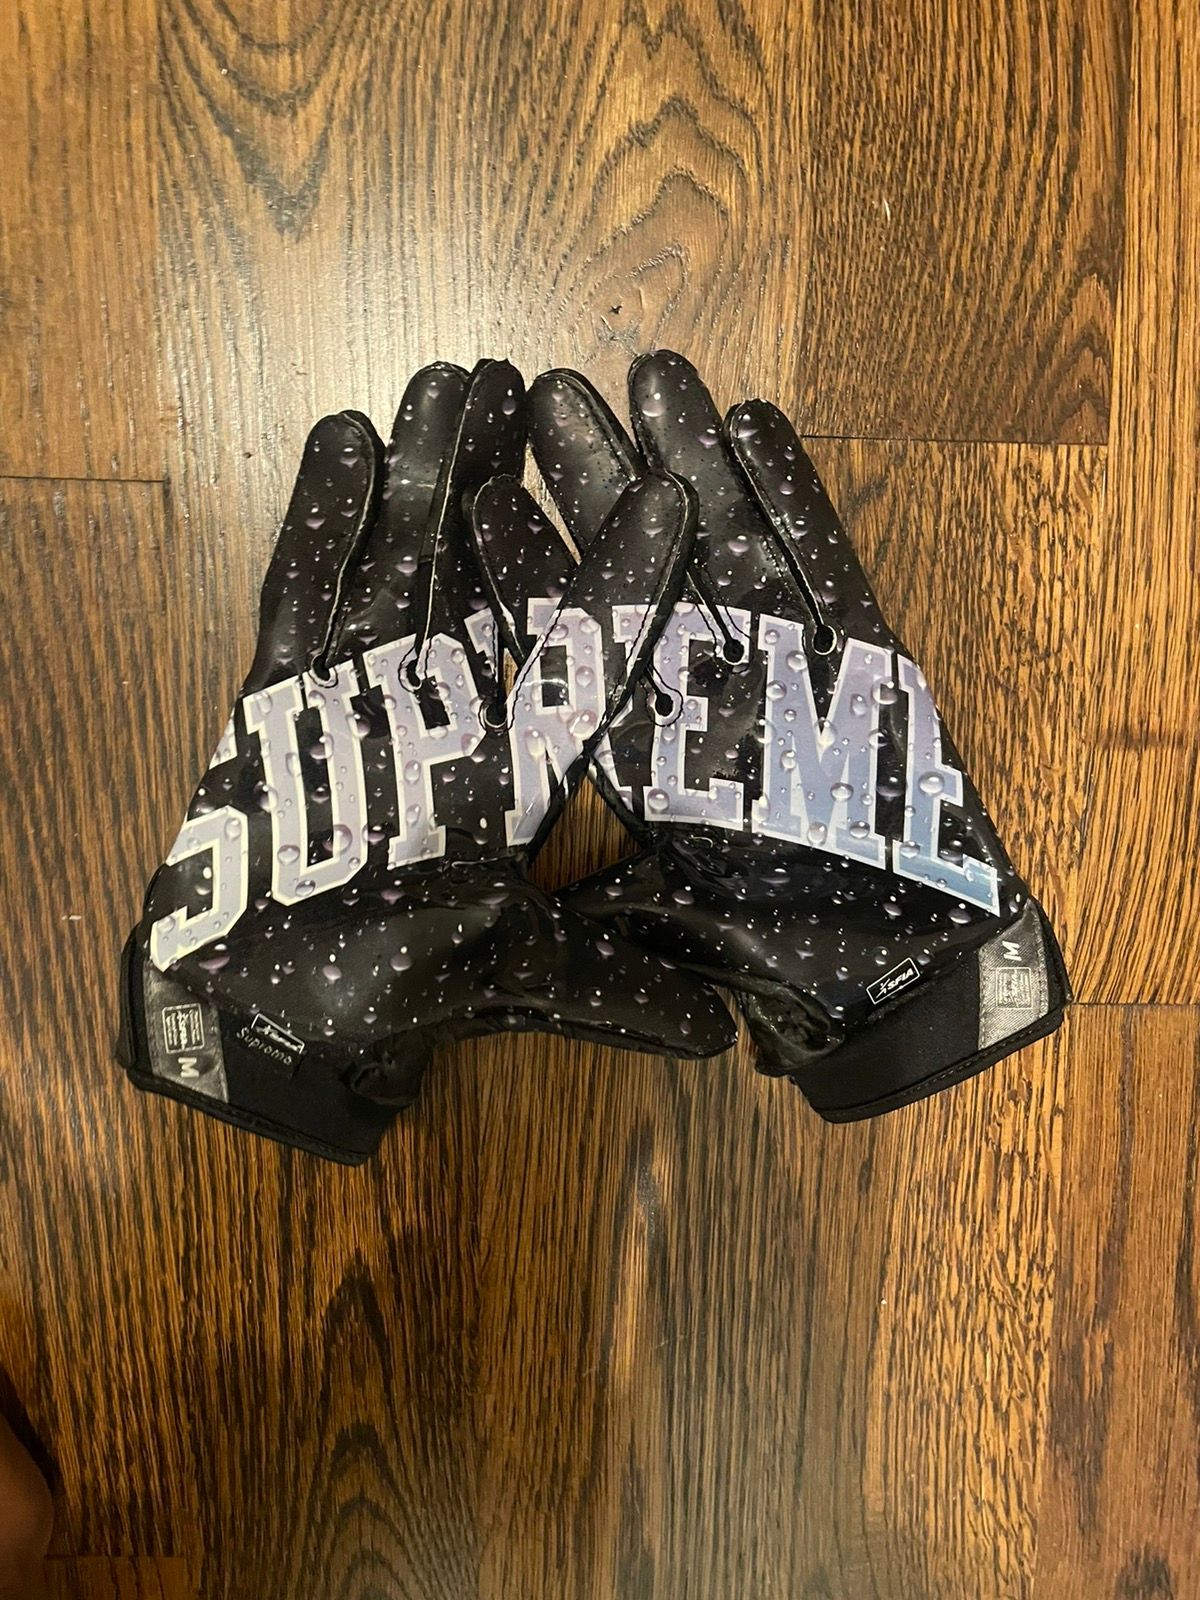 Supreme Football Gloves Black